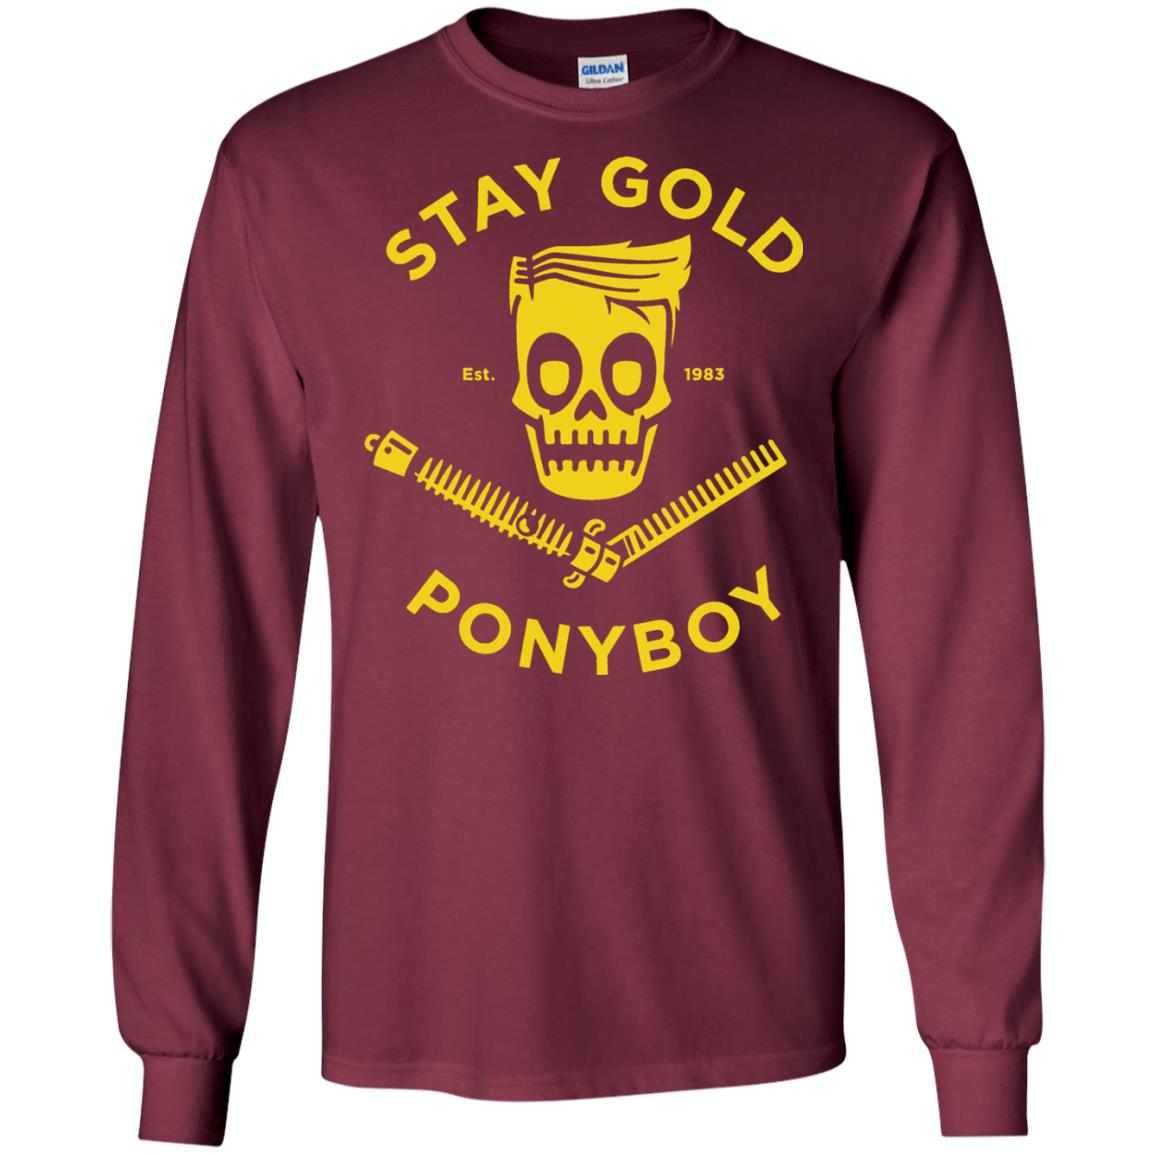 stay gold ponyboy long sleeve - maroon